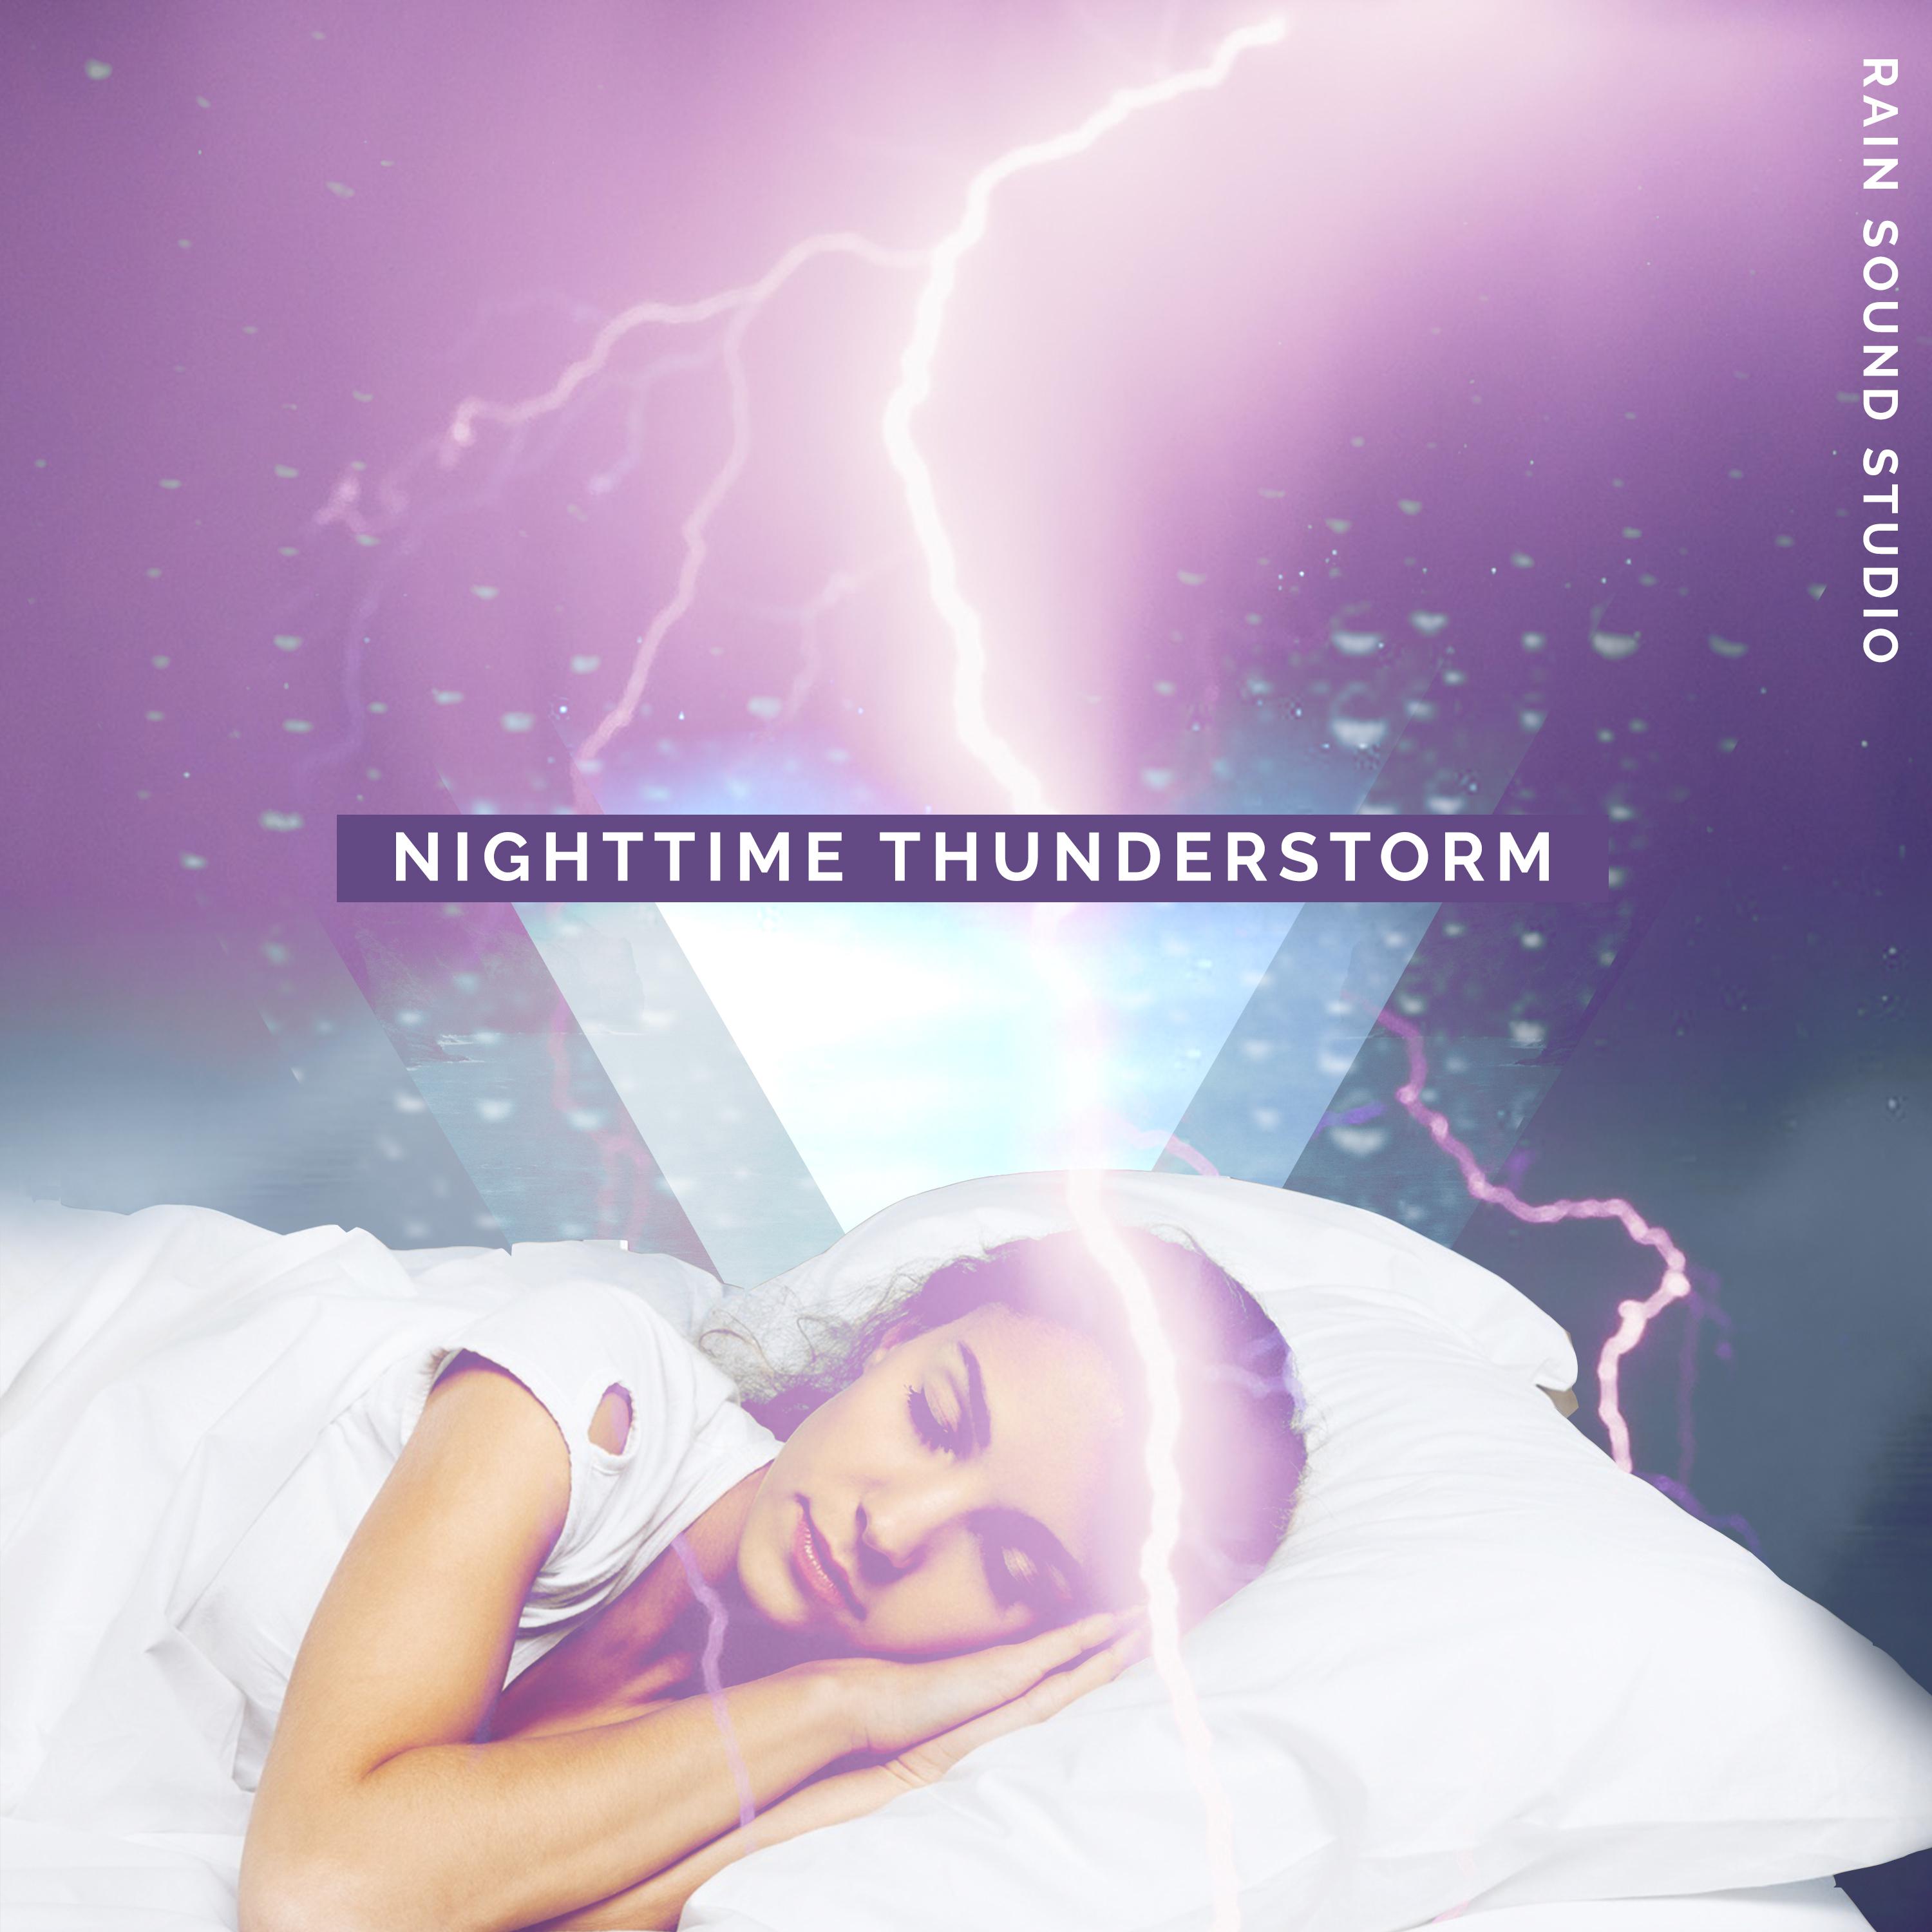 Nighttime Thunderstorm